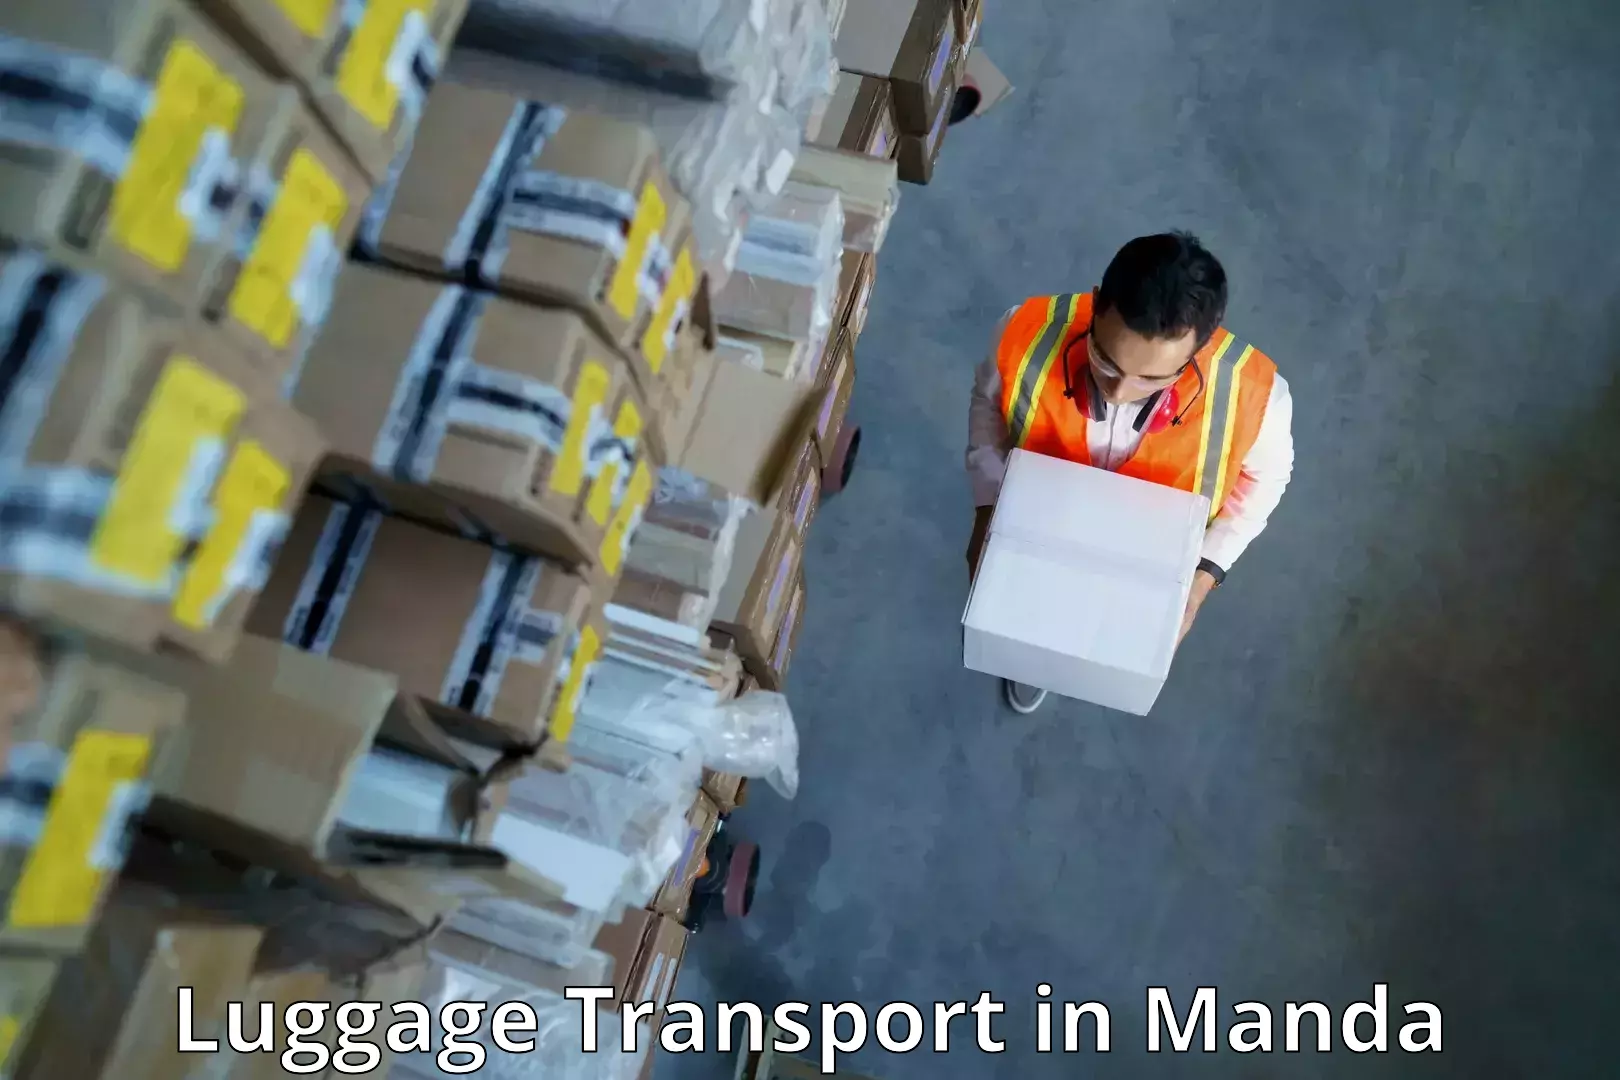 Baggage relocation service in Manda